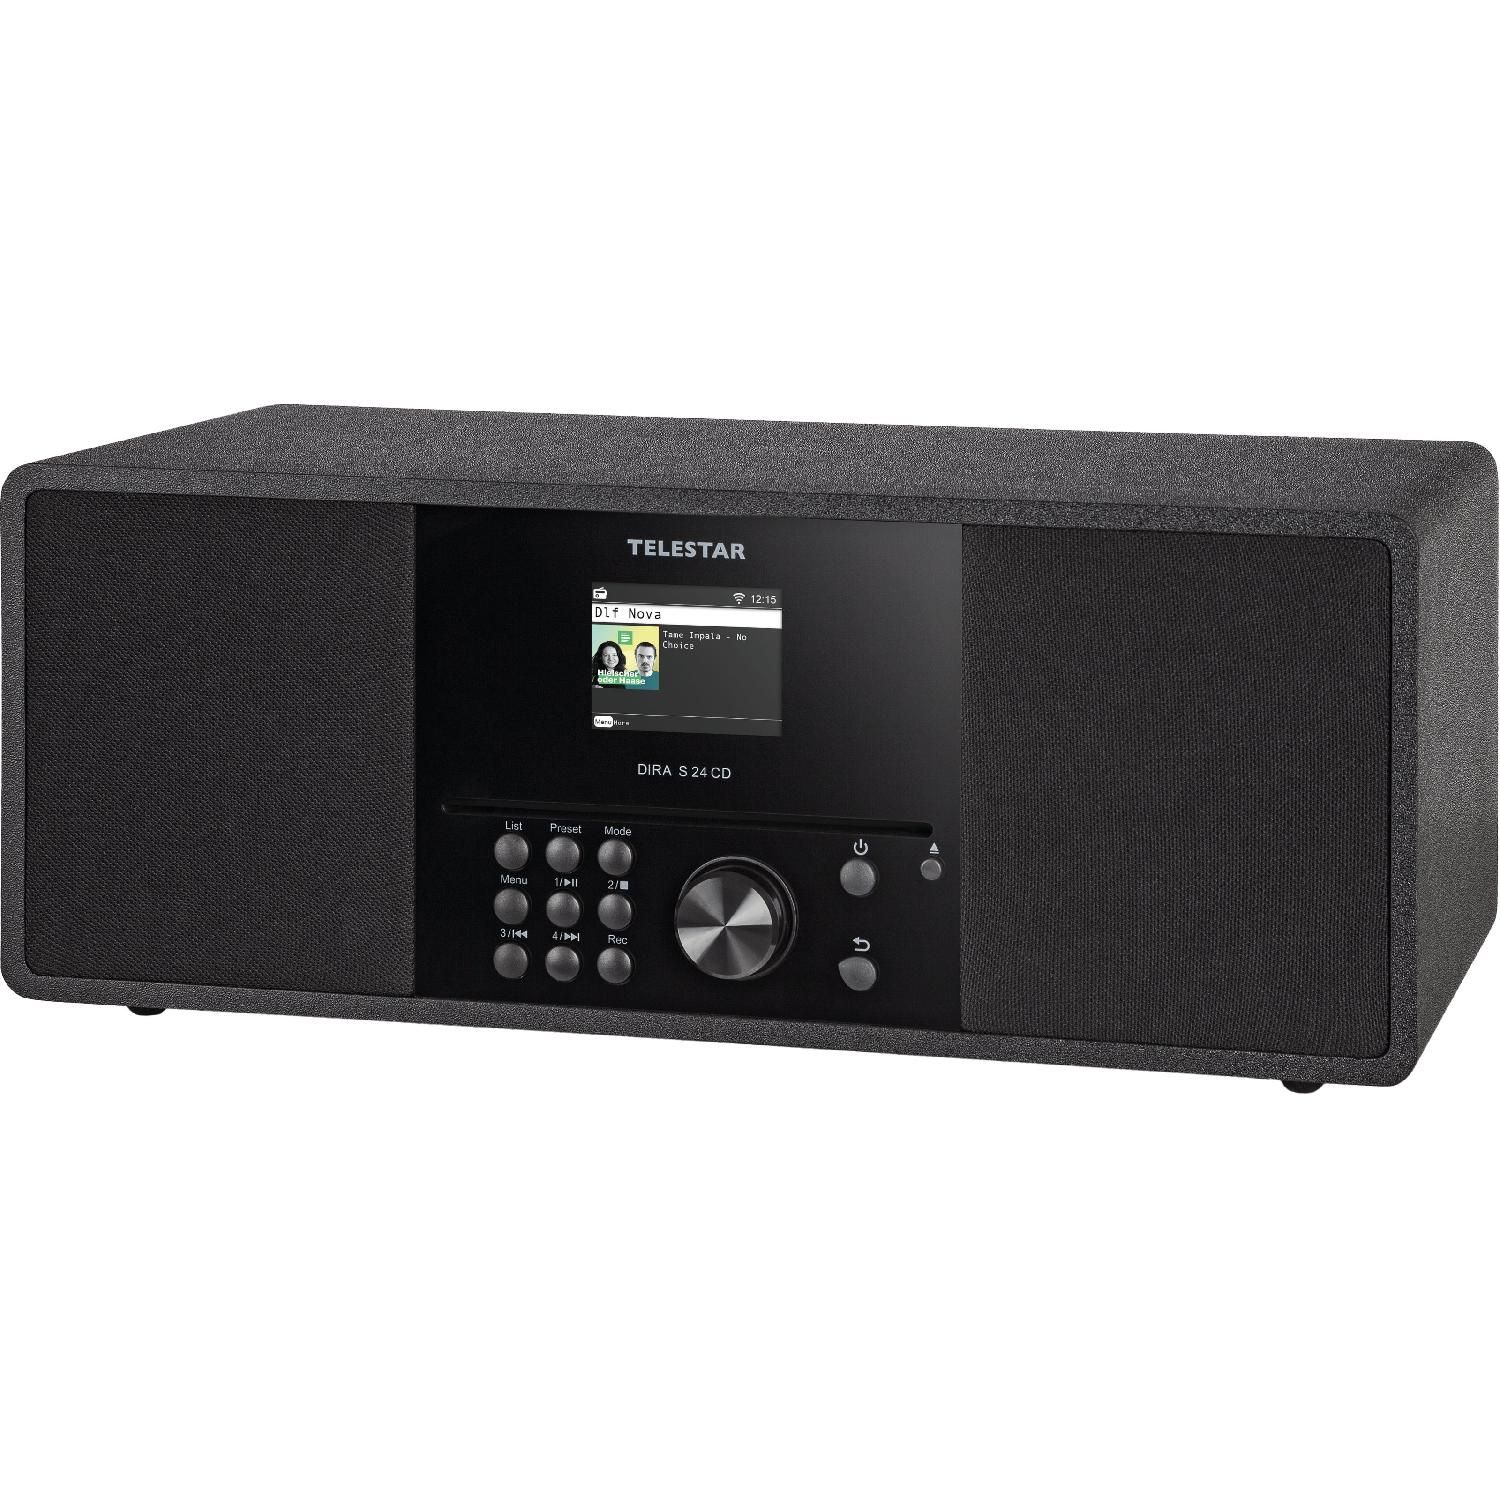 TELESTAR DIRA S FM, DAB+, DAB+ AM, Bluetooth, Radio/Lautsprecher, 24 DAB, schwarz CD DAB+, FM